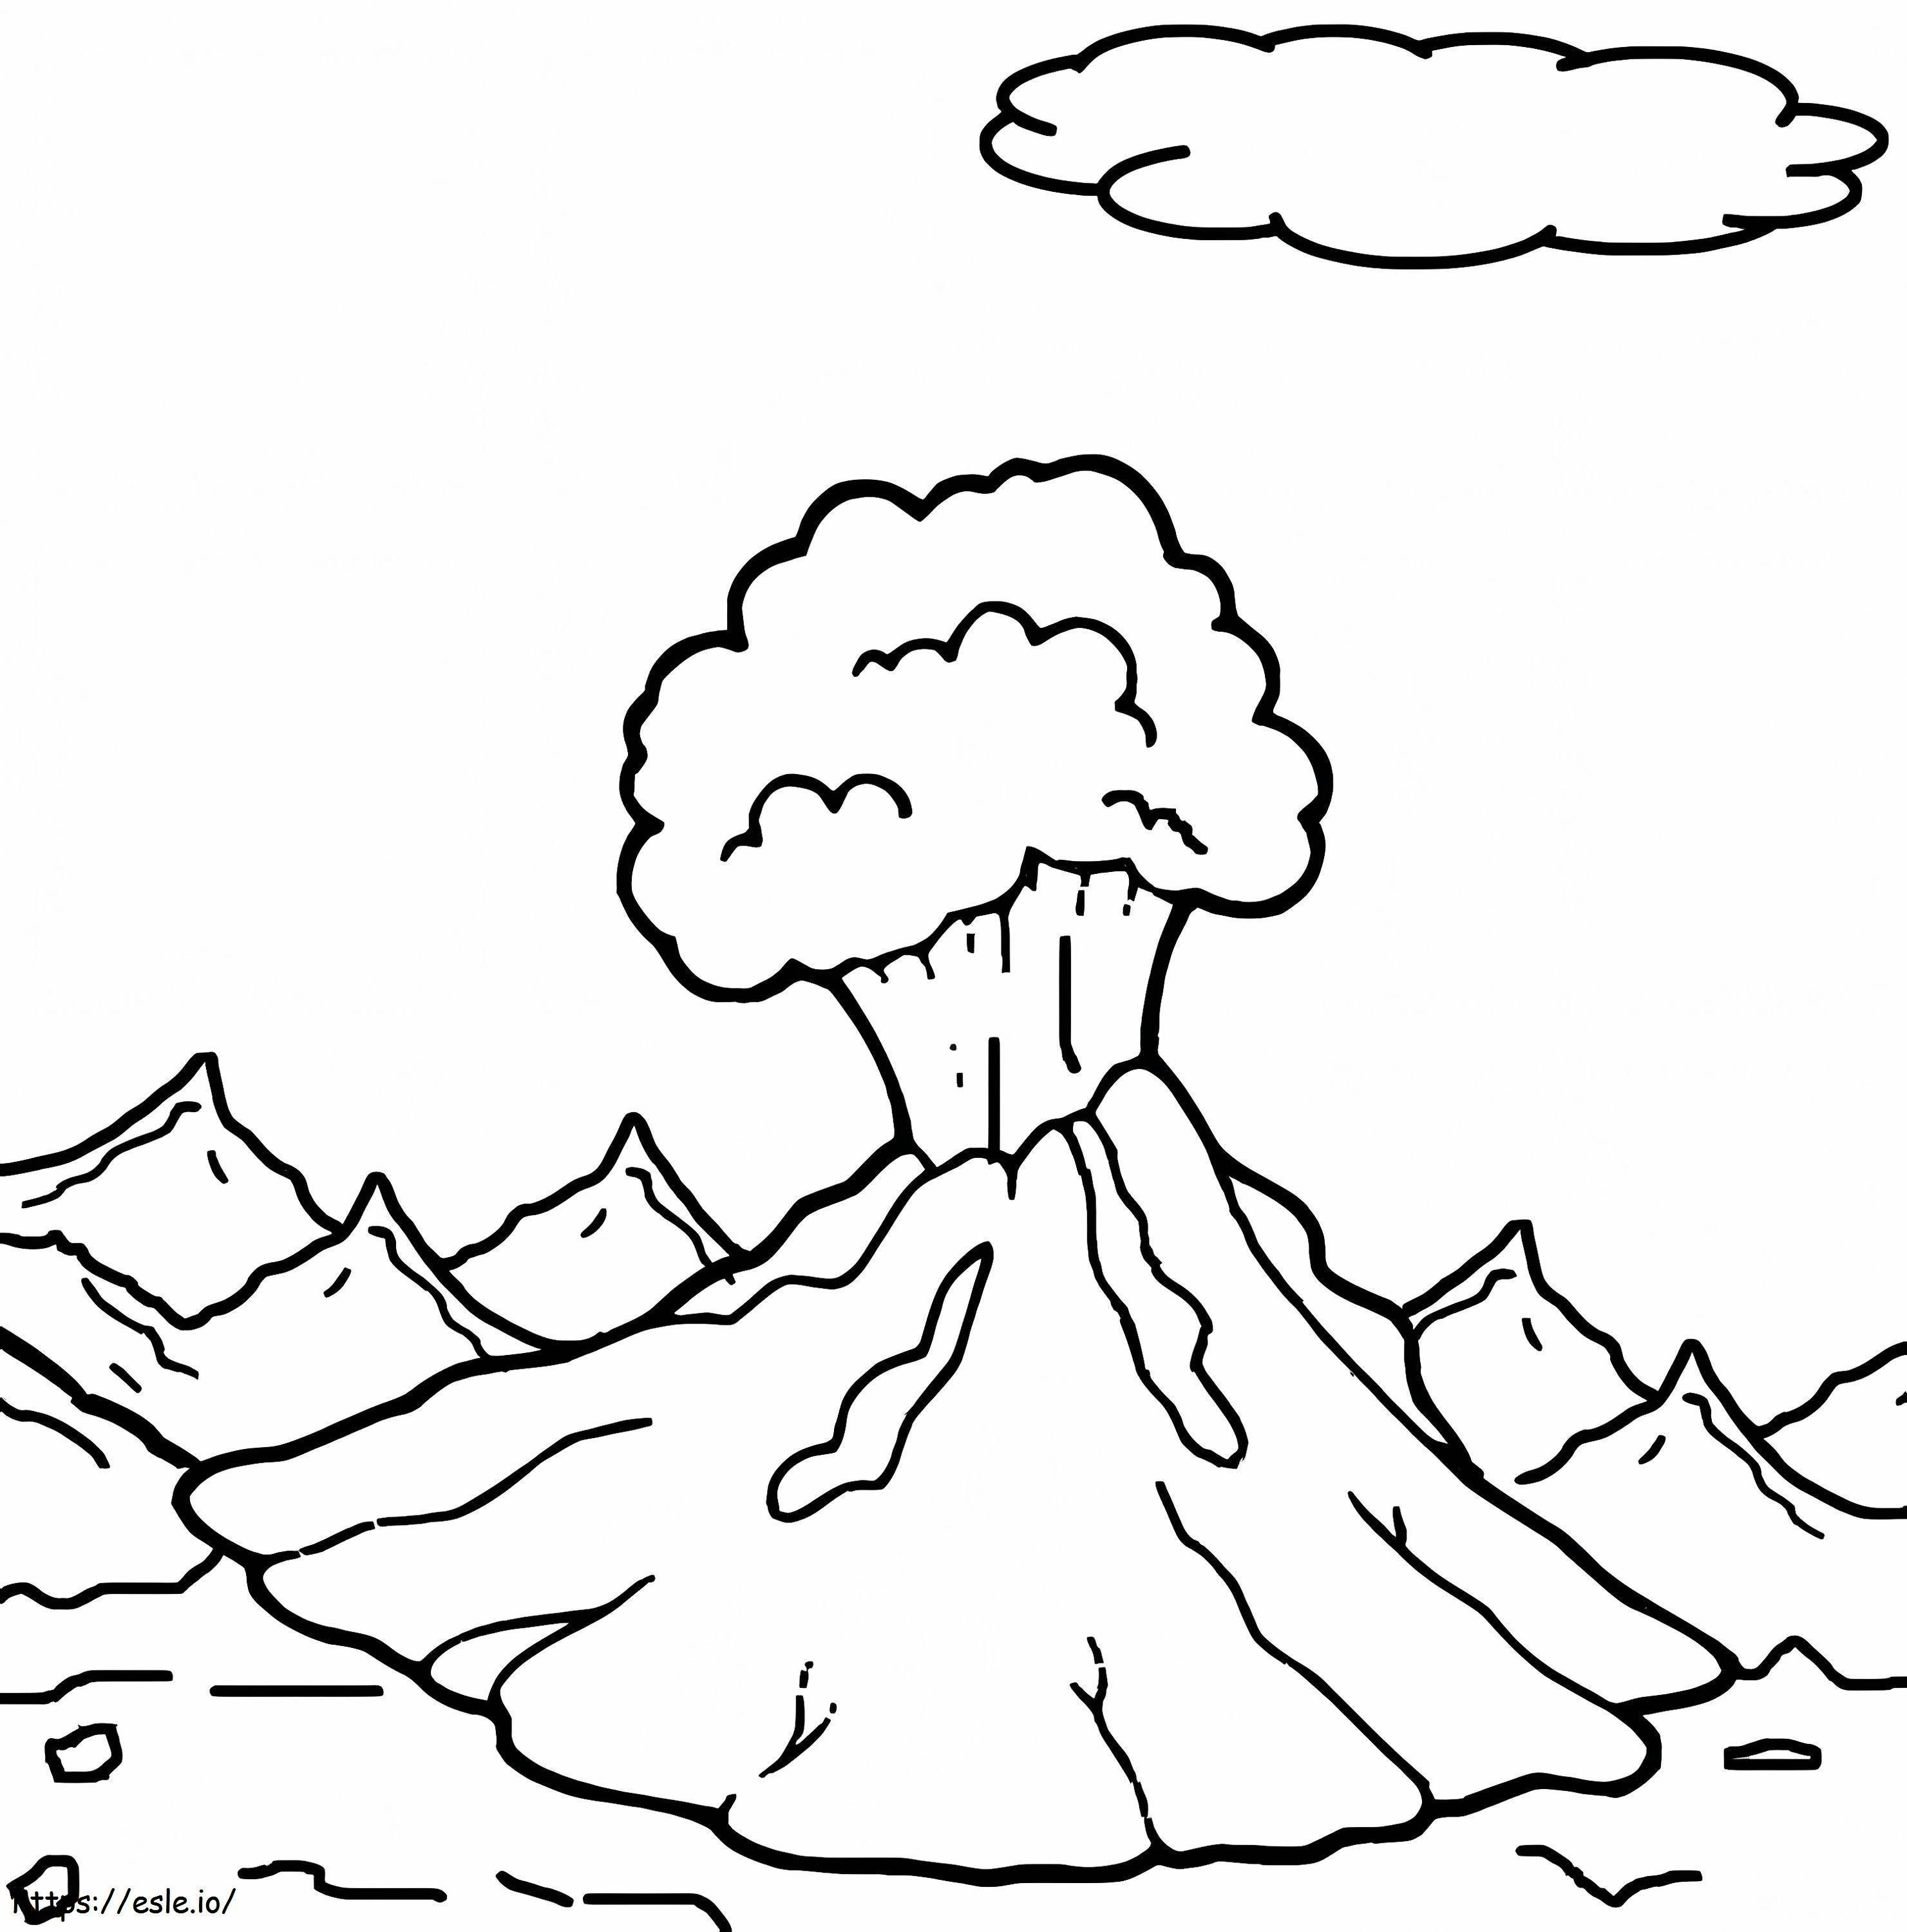 Vulkanausbruch ausmalbilder